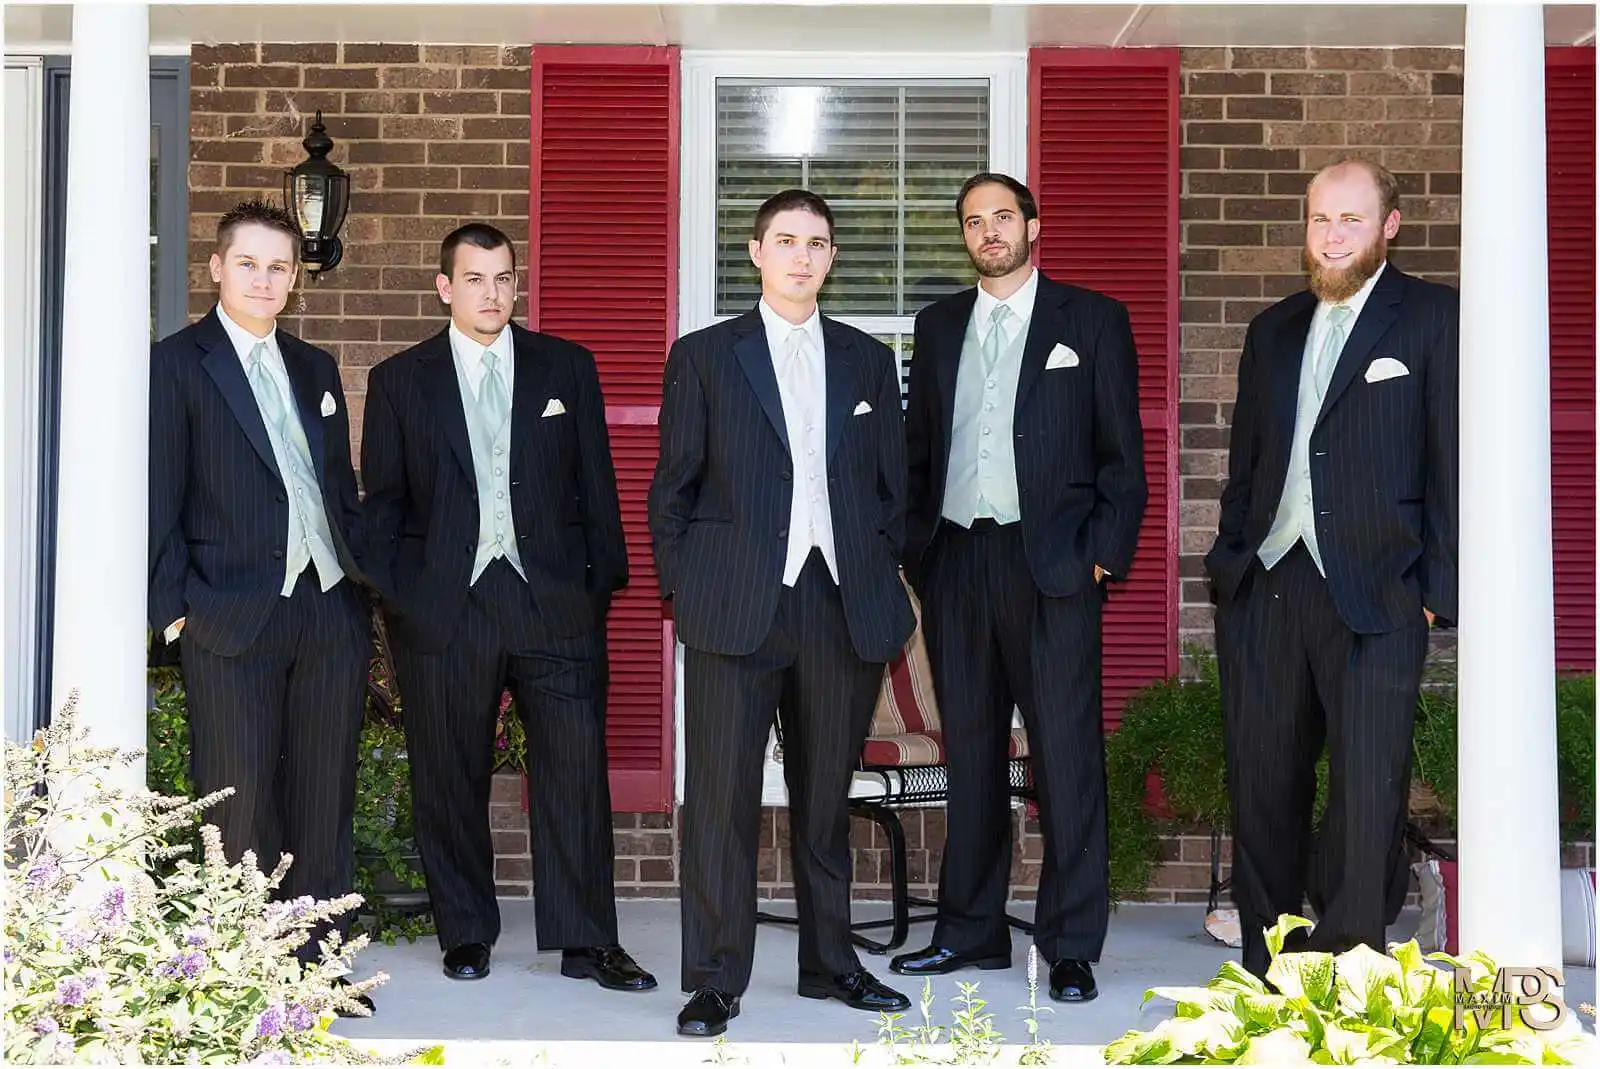 Elegant groomsmen posing in formal suits for a wedding.